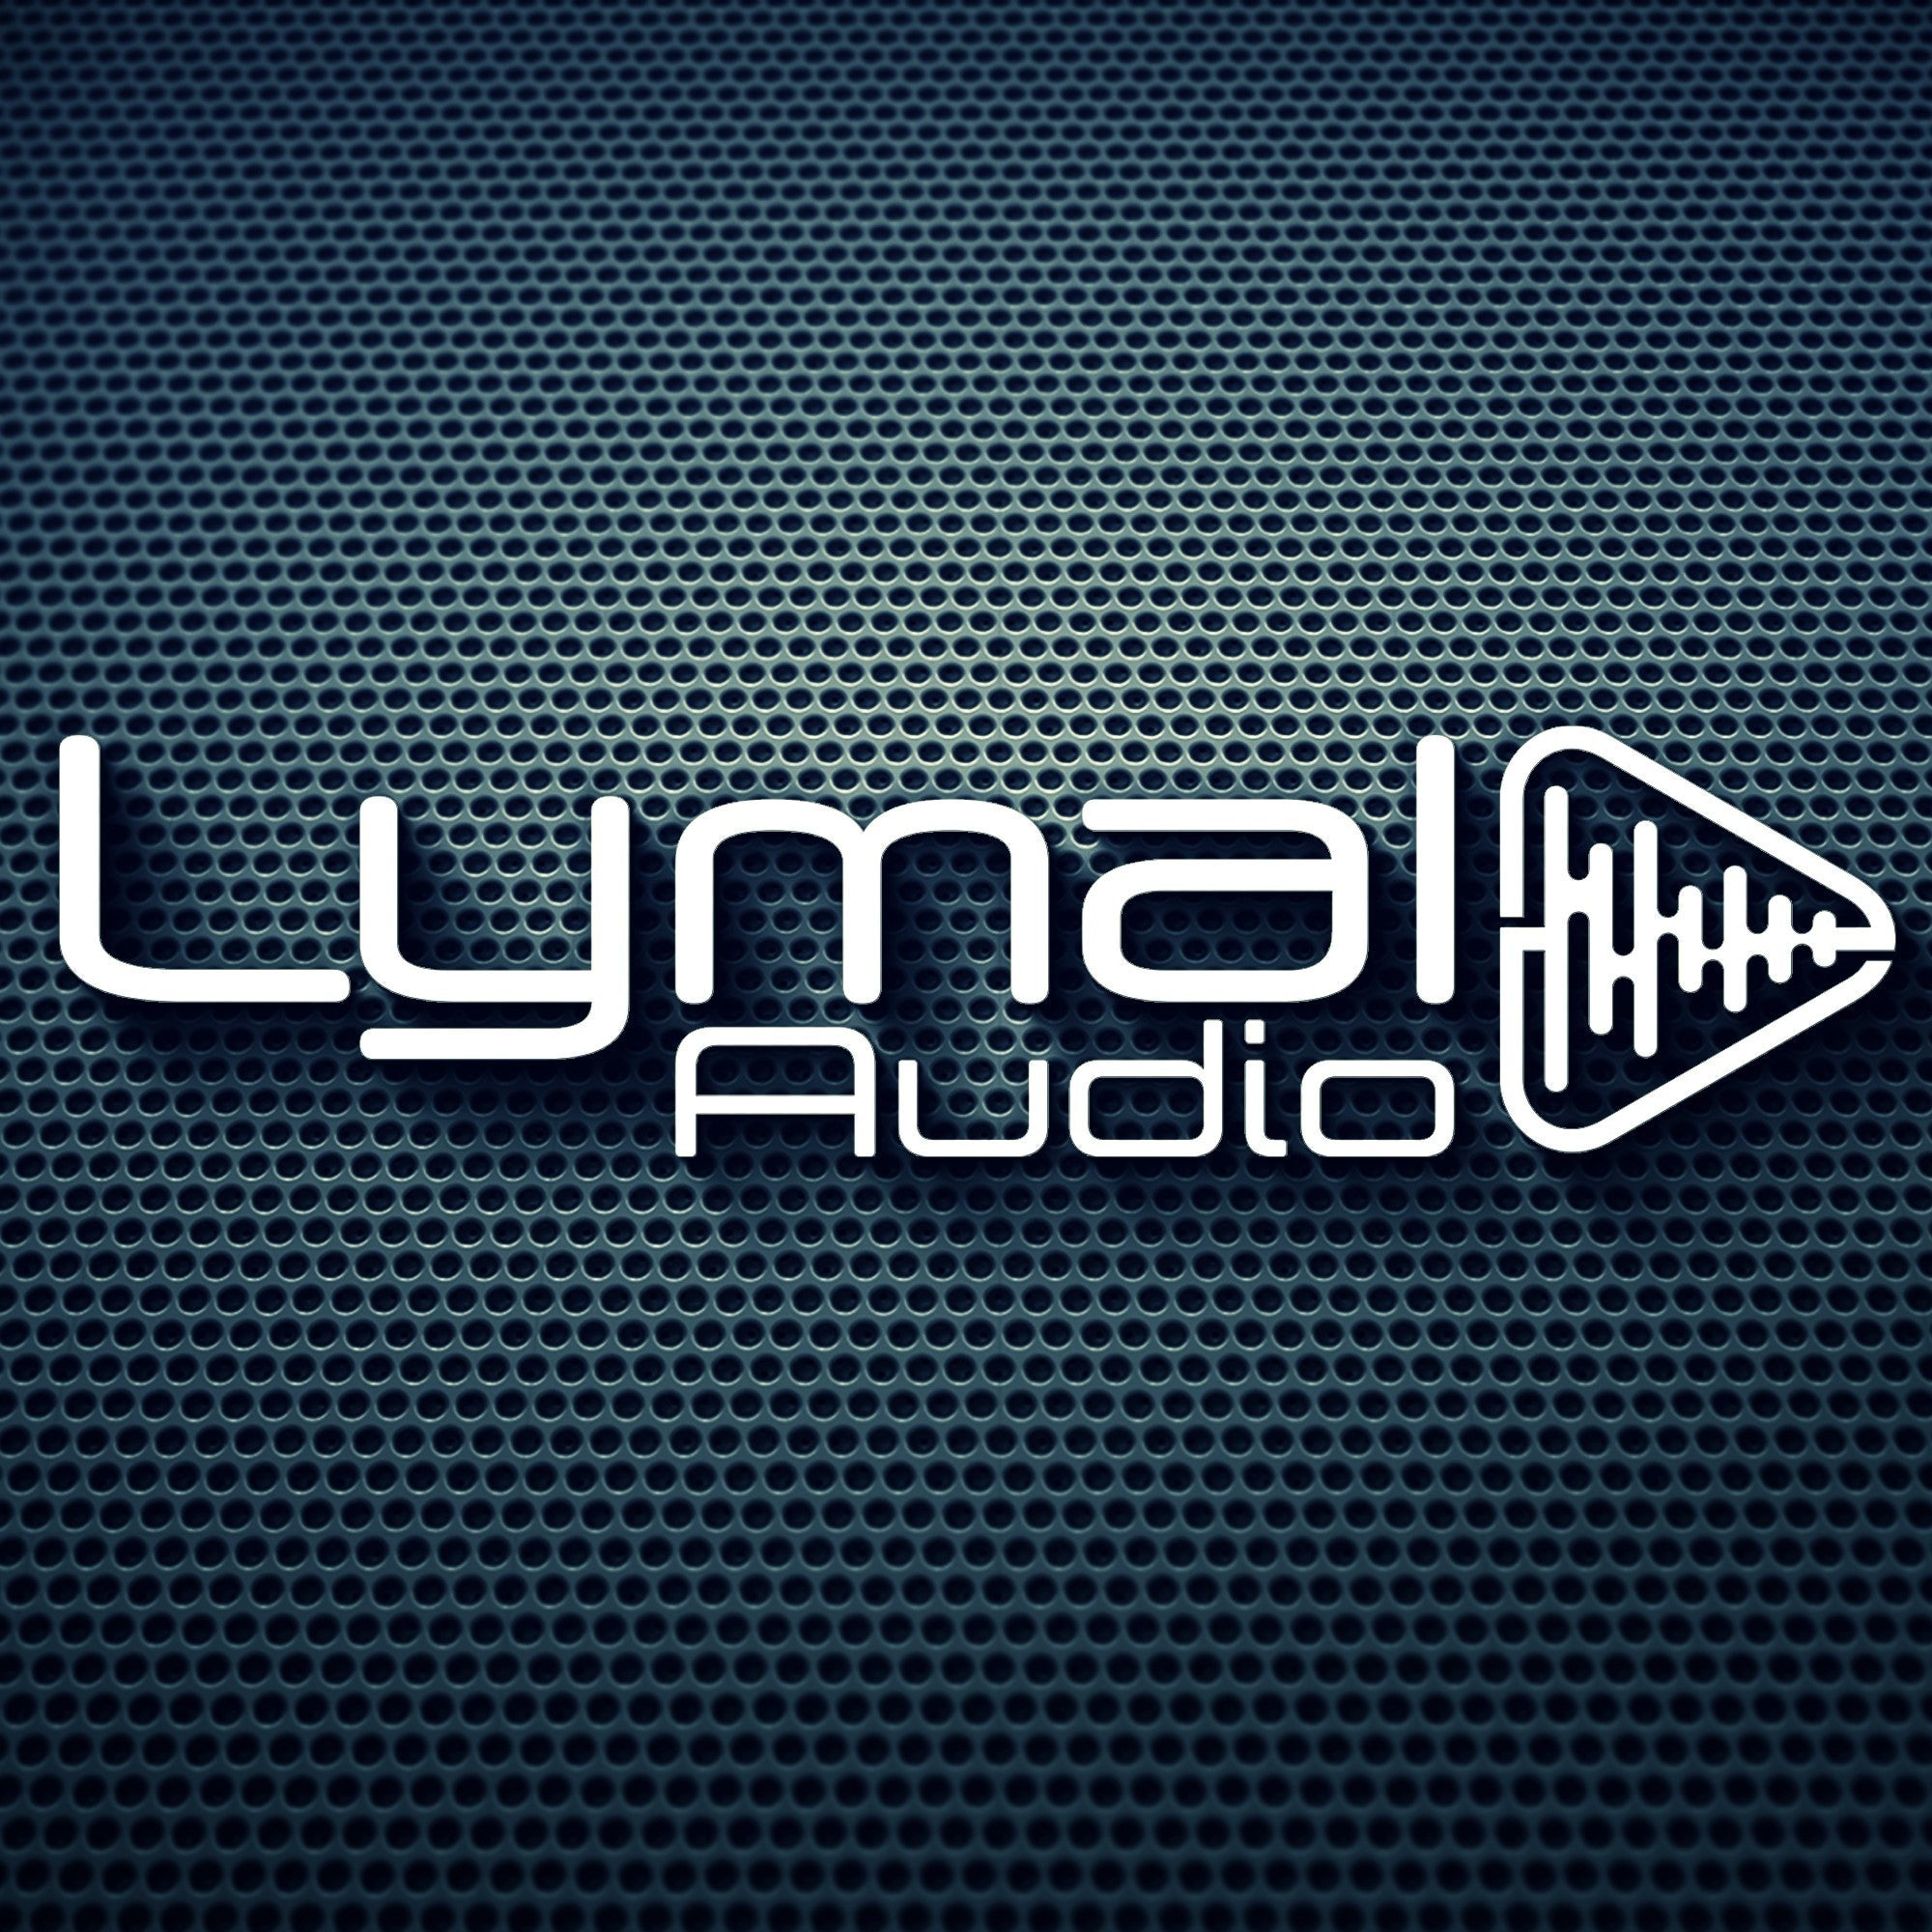 Bocina 6.5" Lymal Audio LT-620F